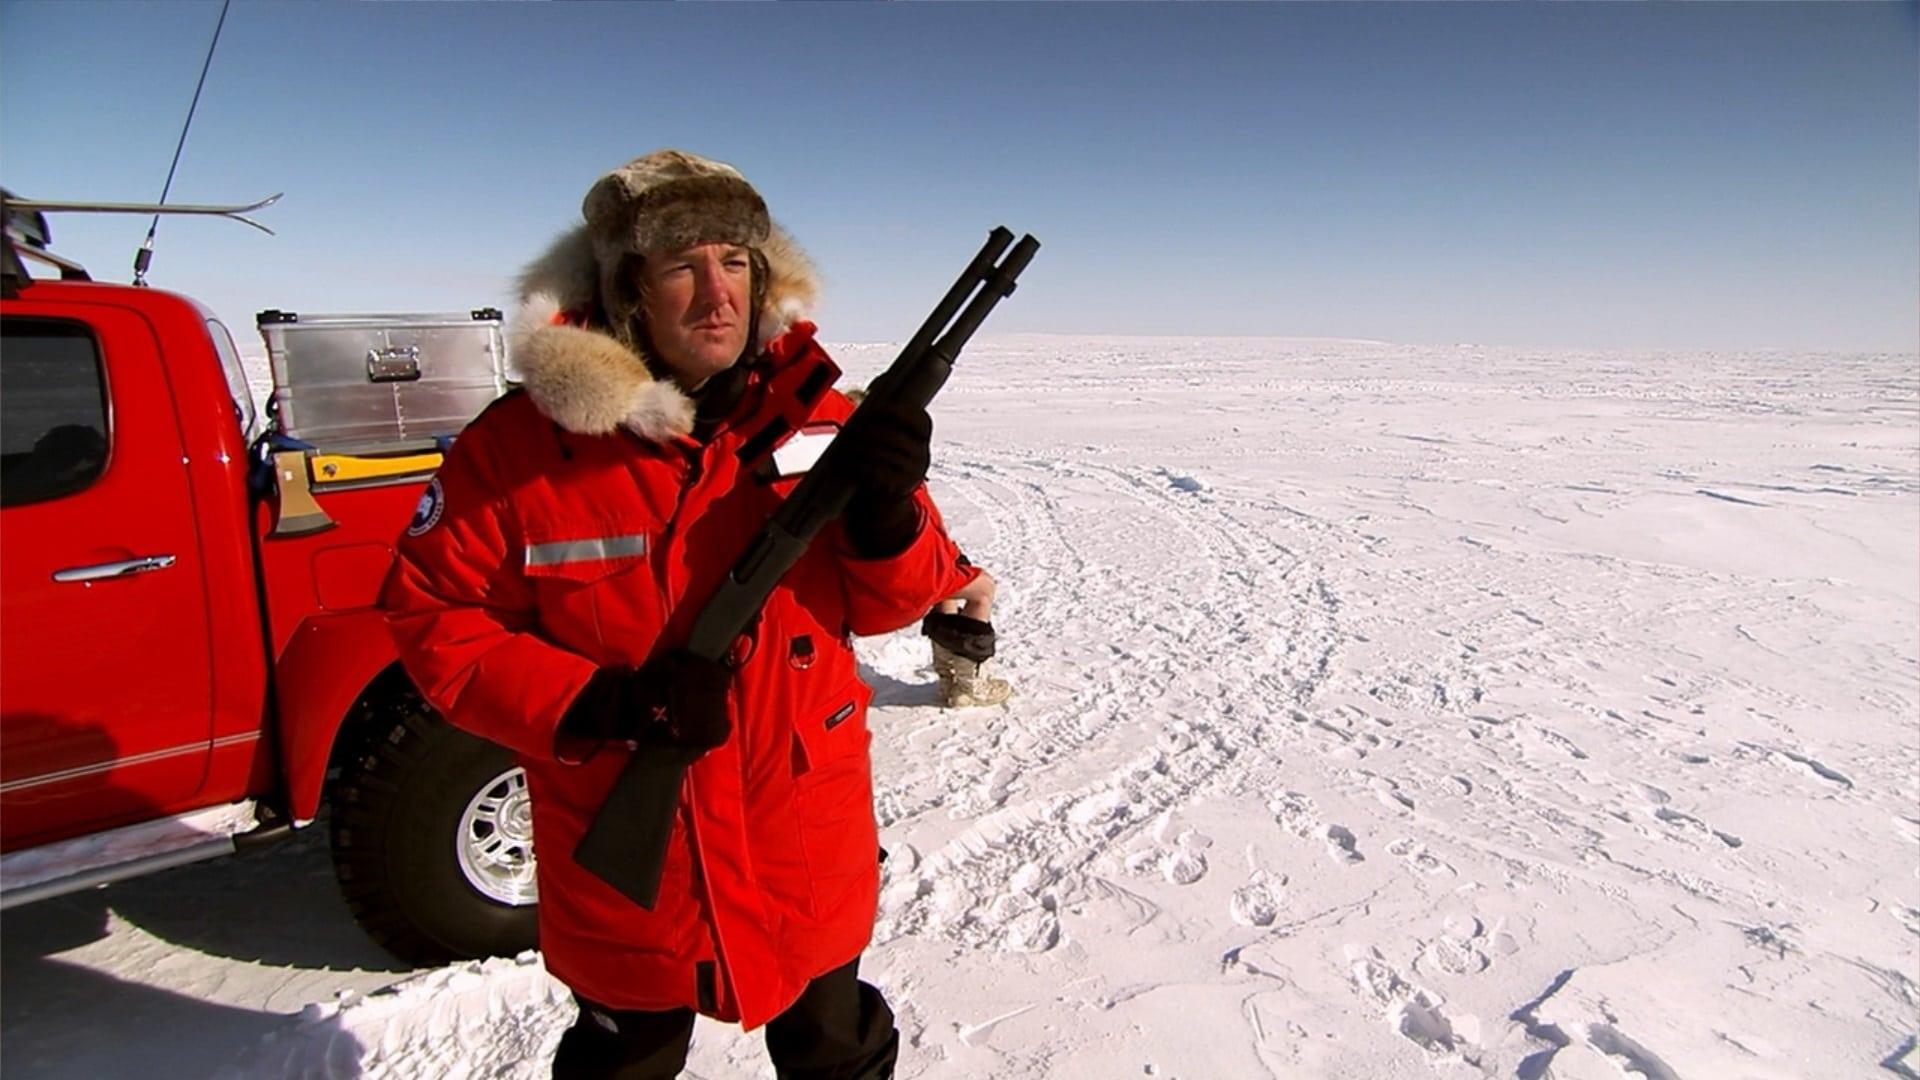 Top Gear: Polar Special backdrop